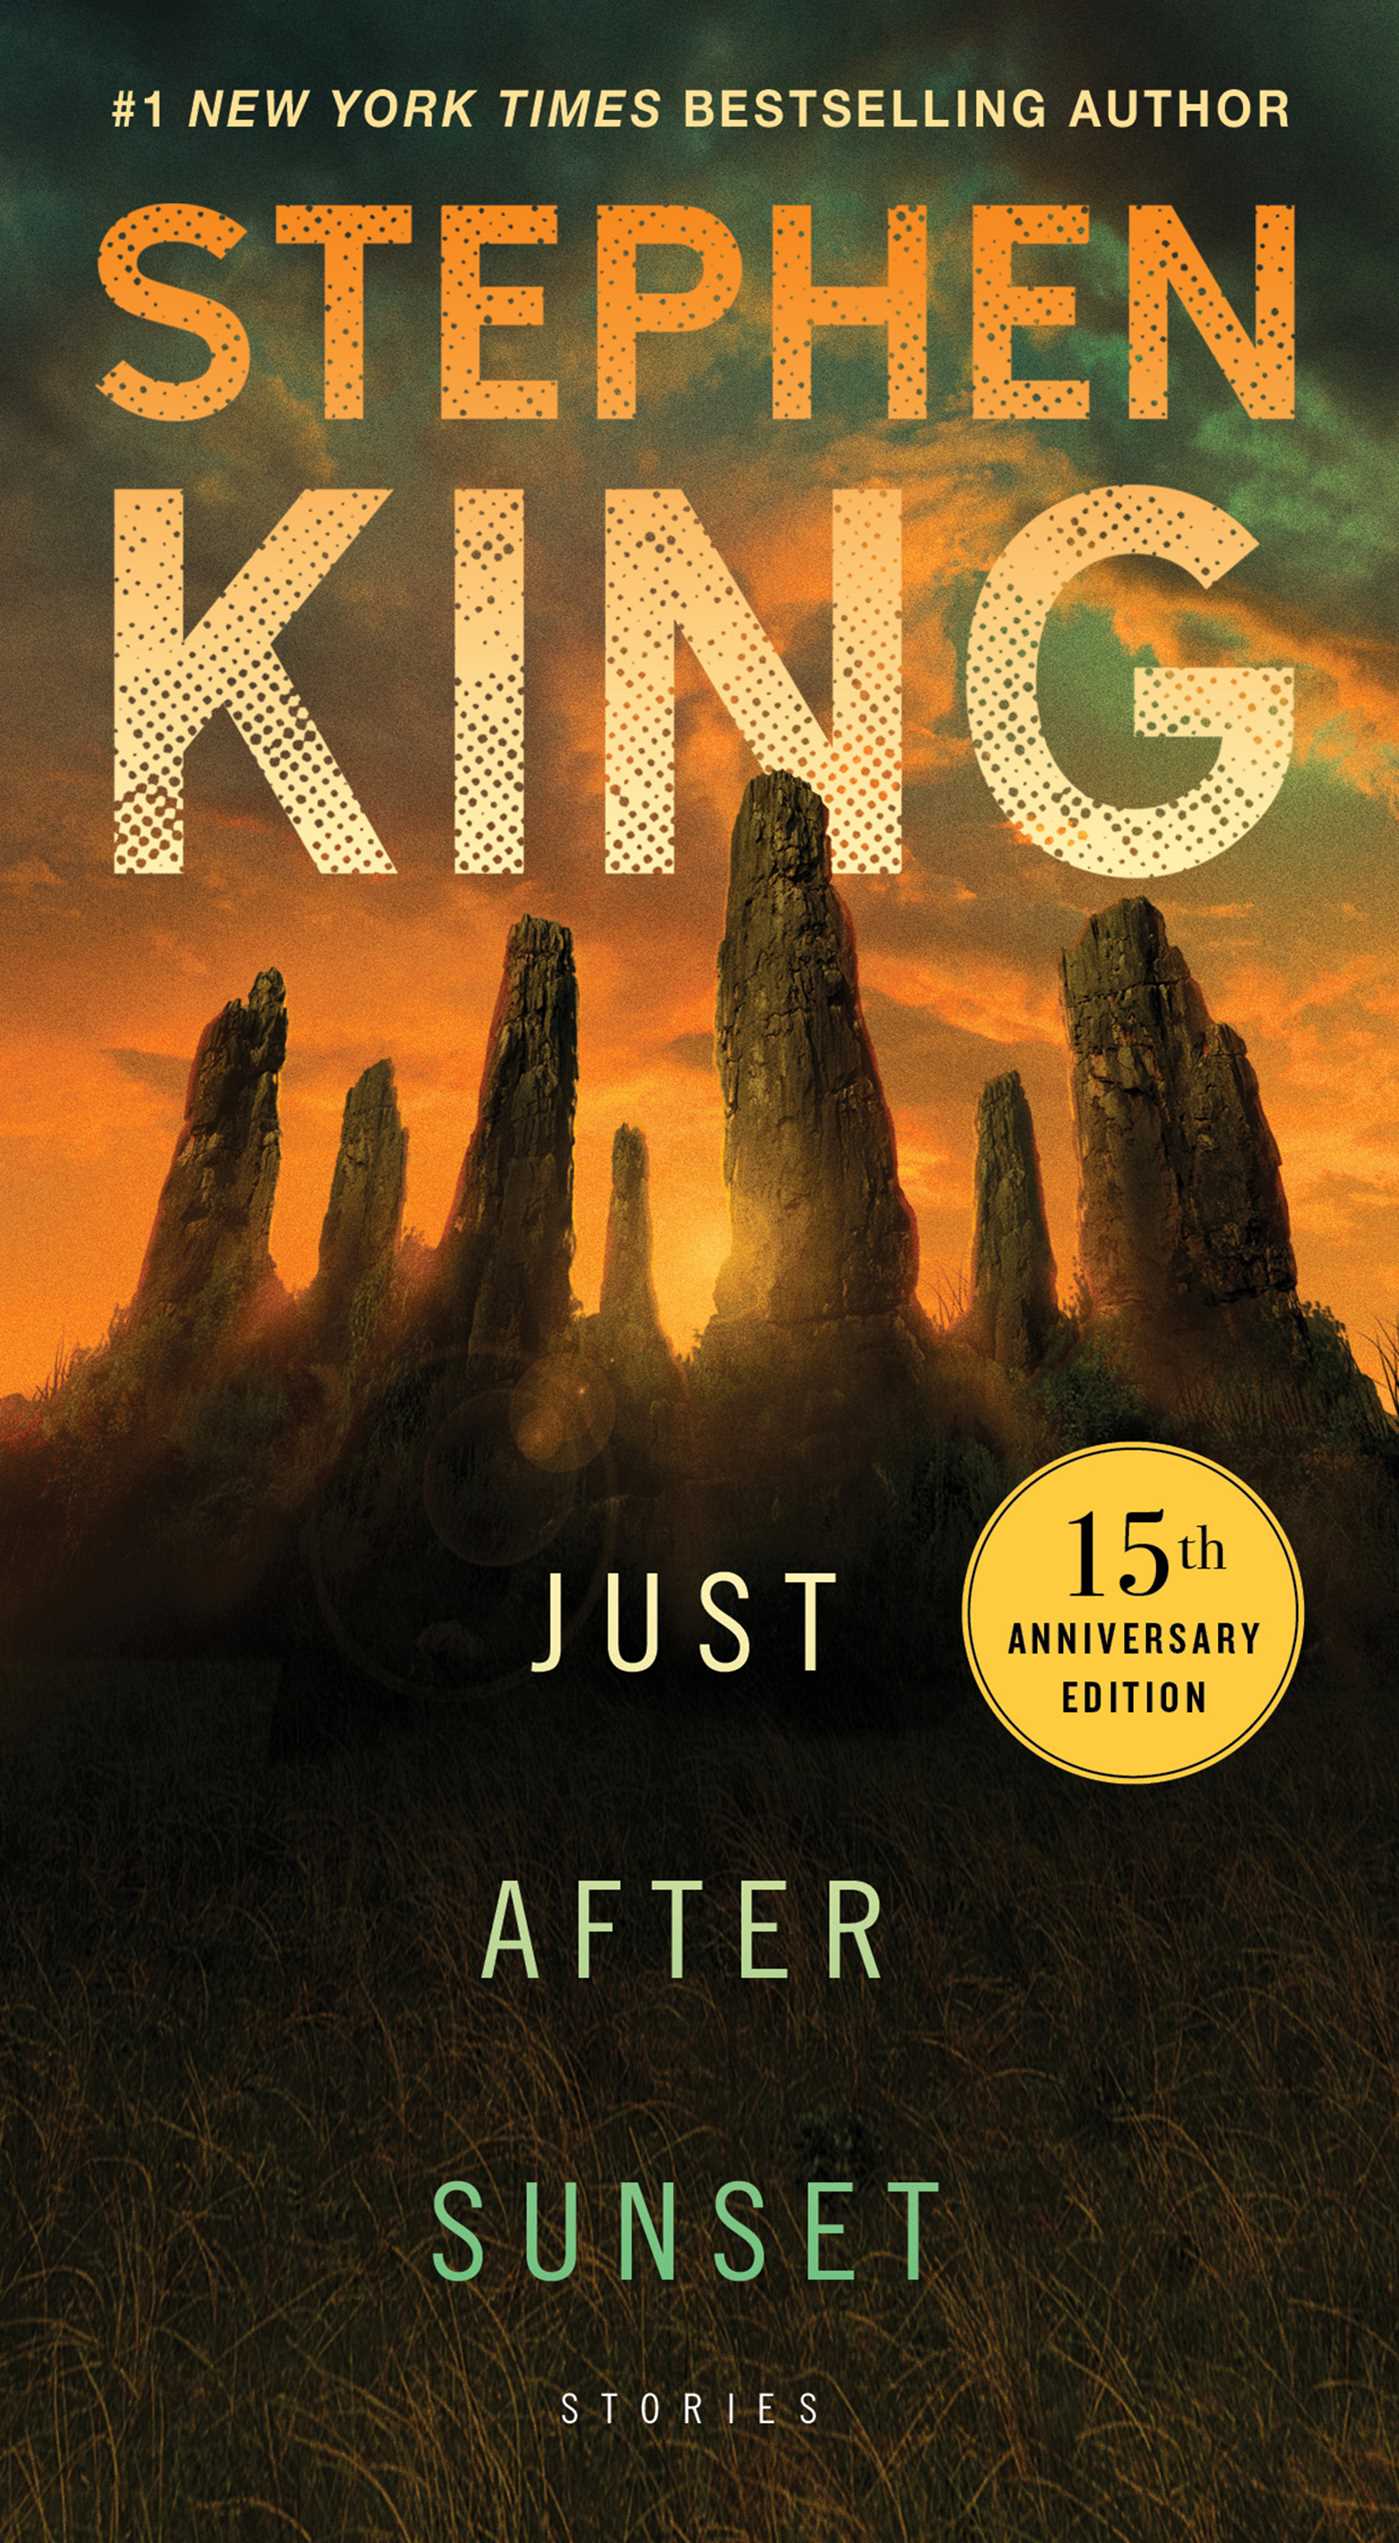 Just After Sunset : Stories | King, Stephen (Auteur)